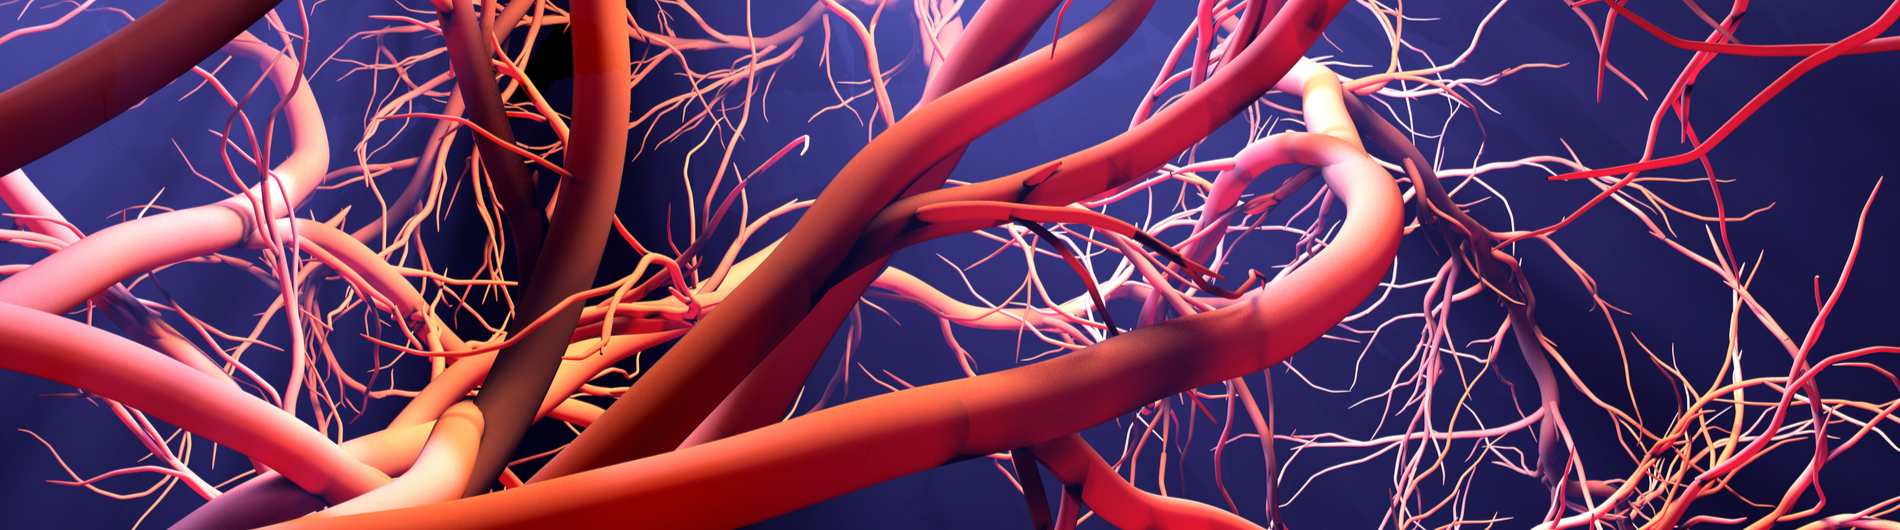 new blood vessels photo